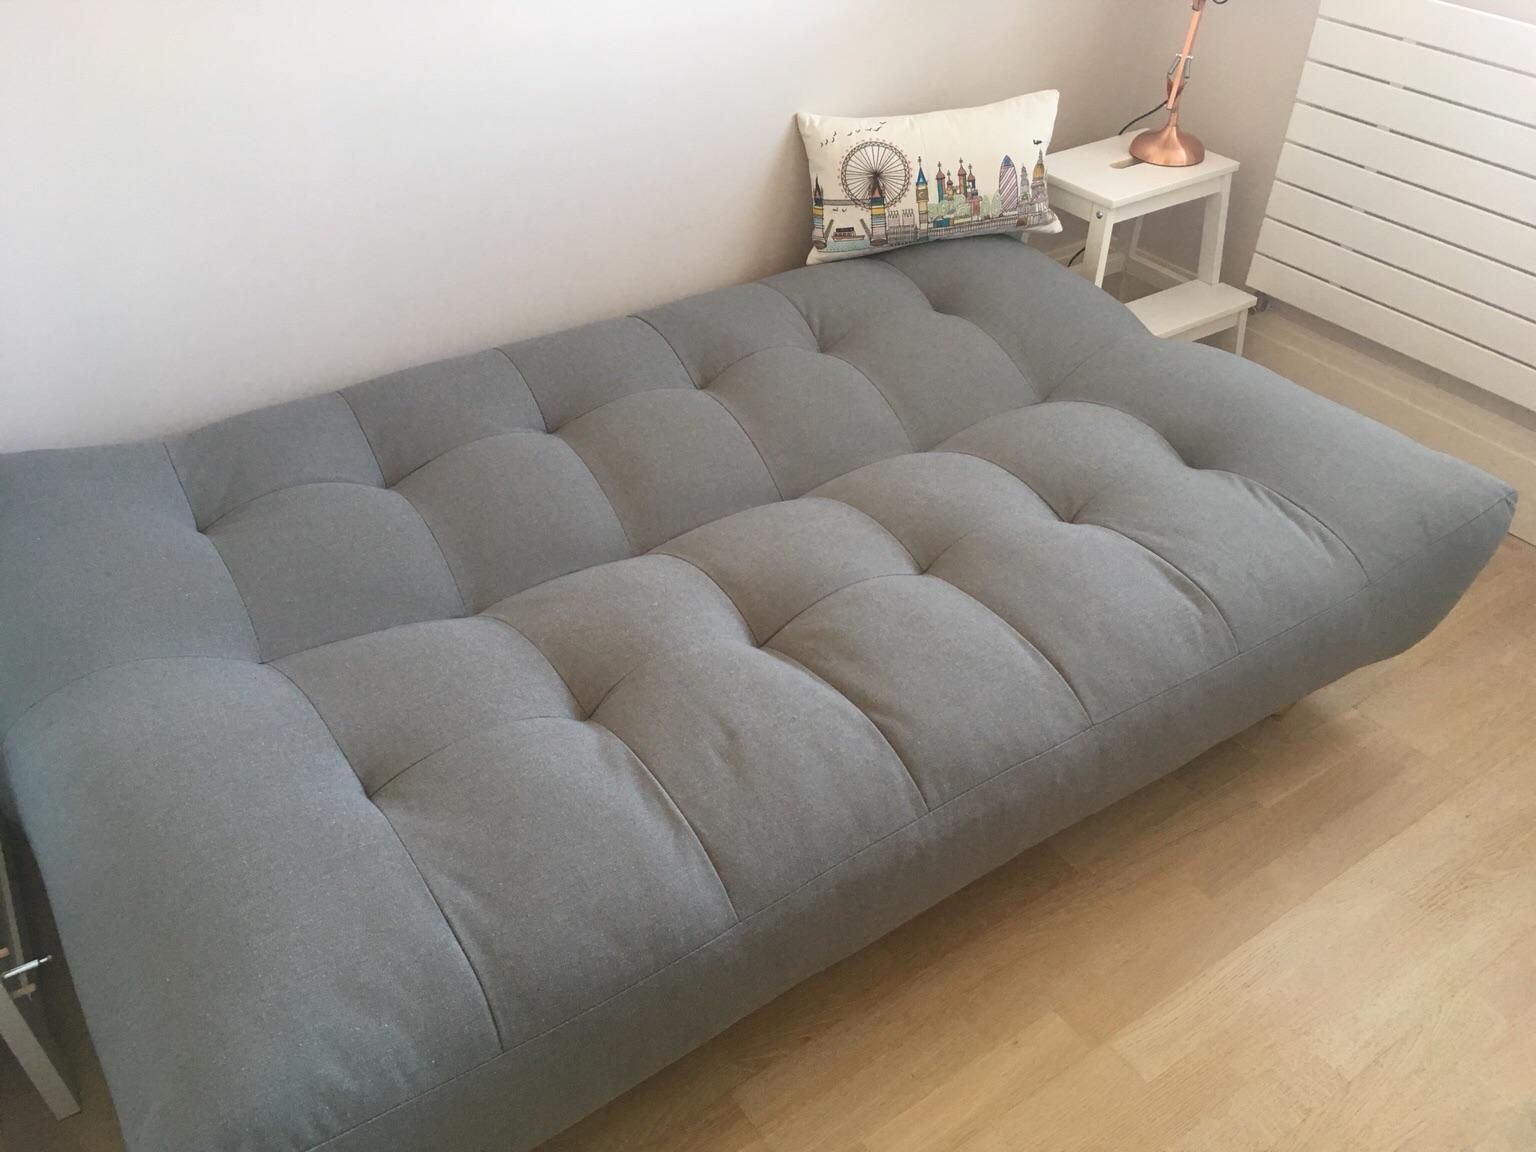 habitat sofa bed covers